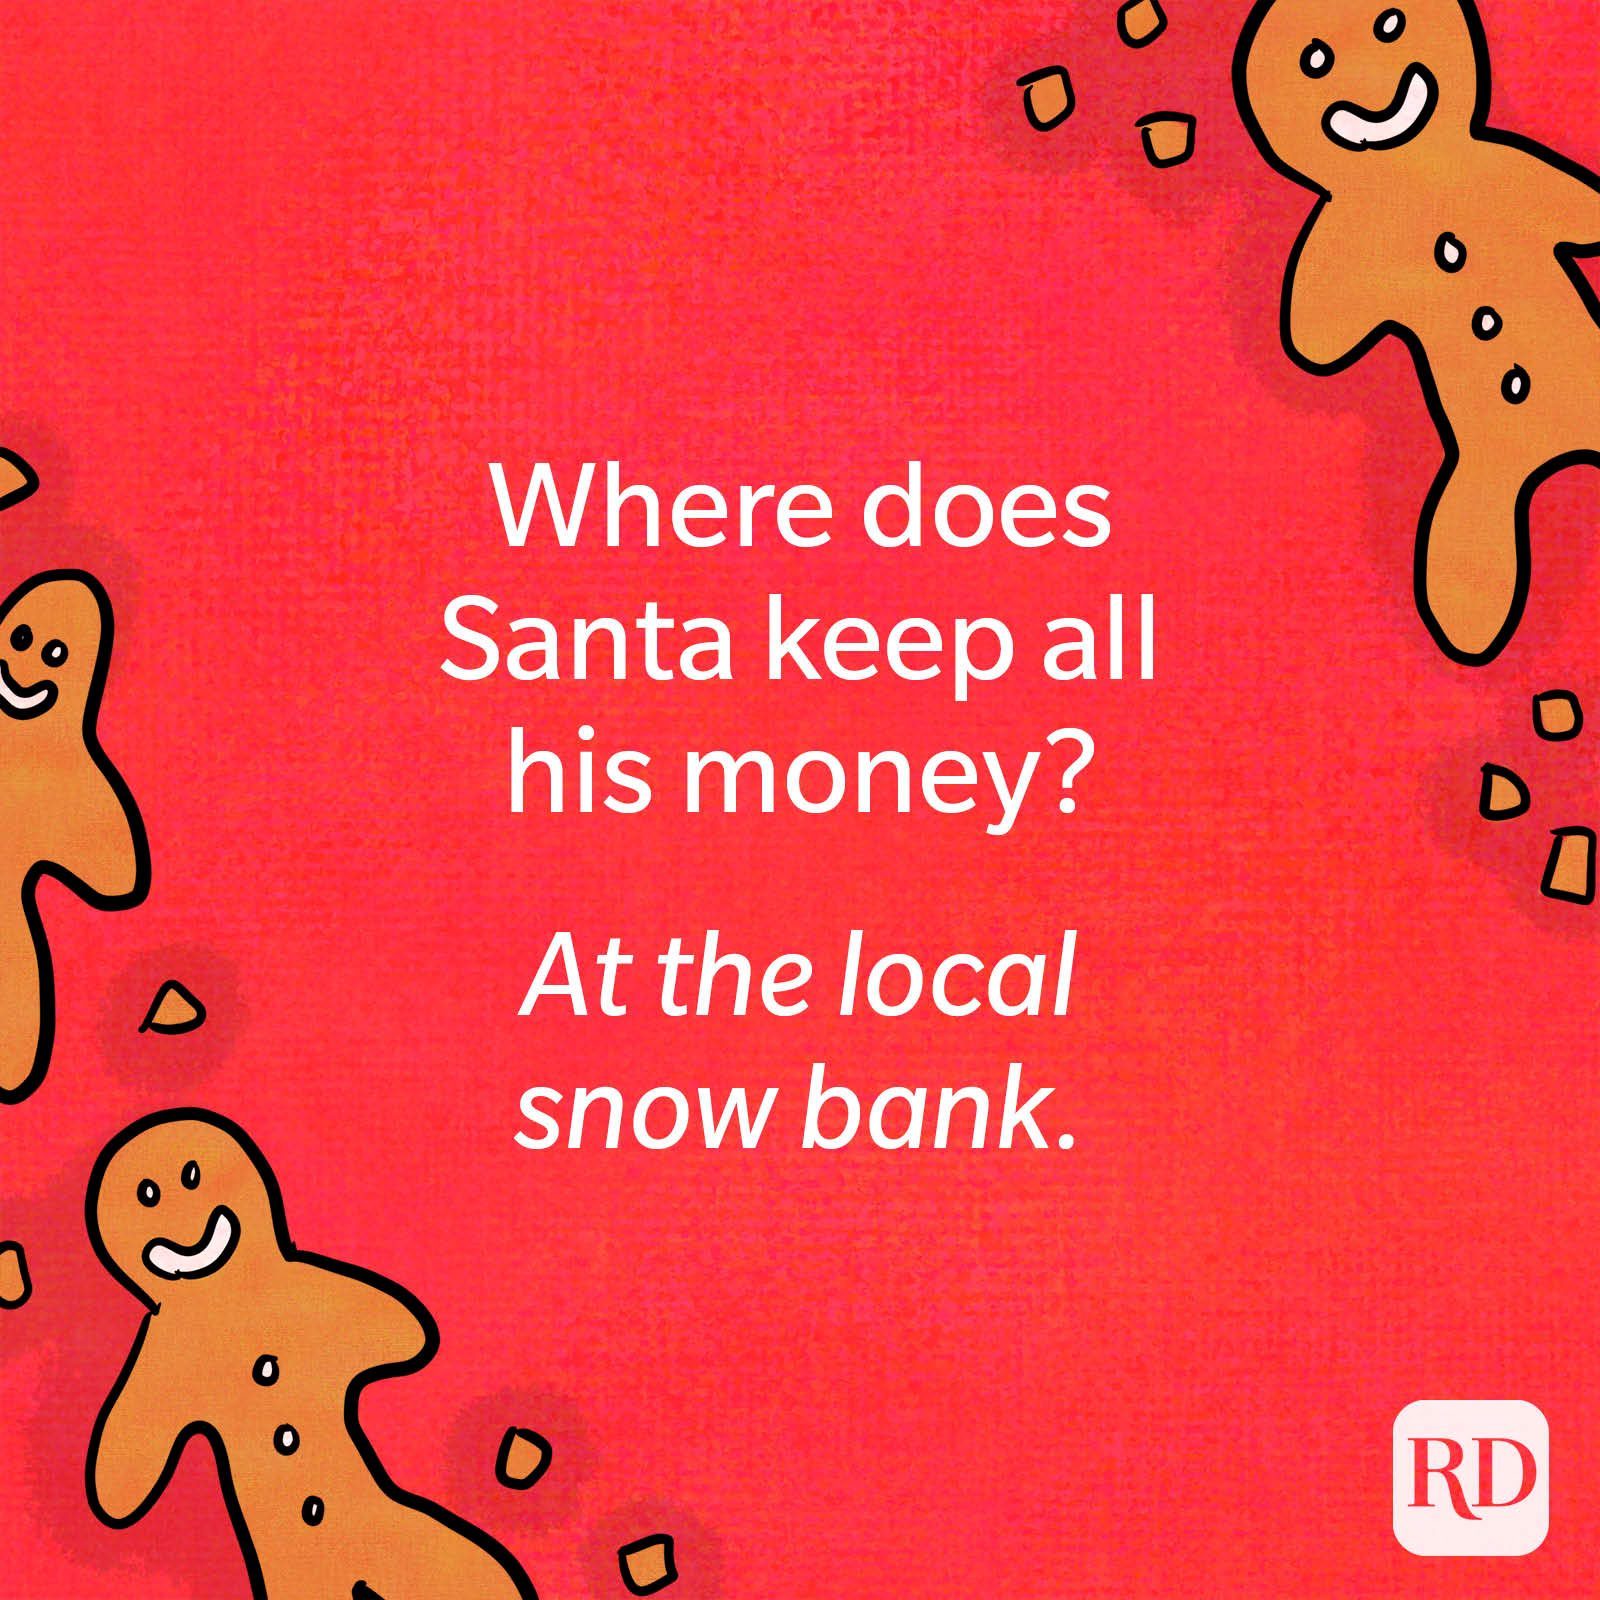 Where does Santa keep all his money?